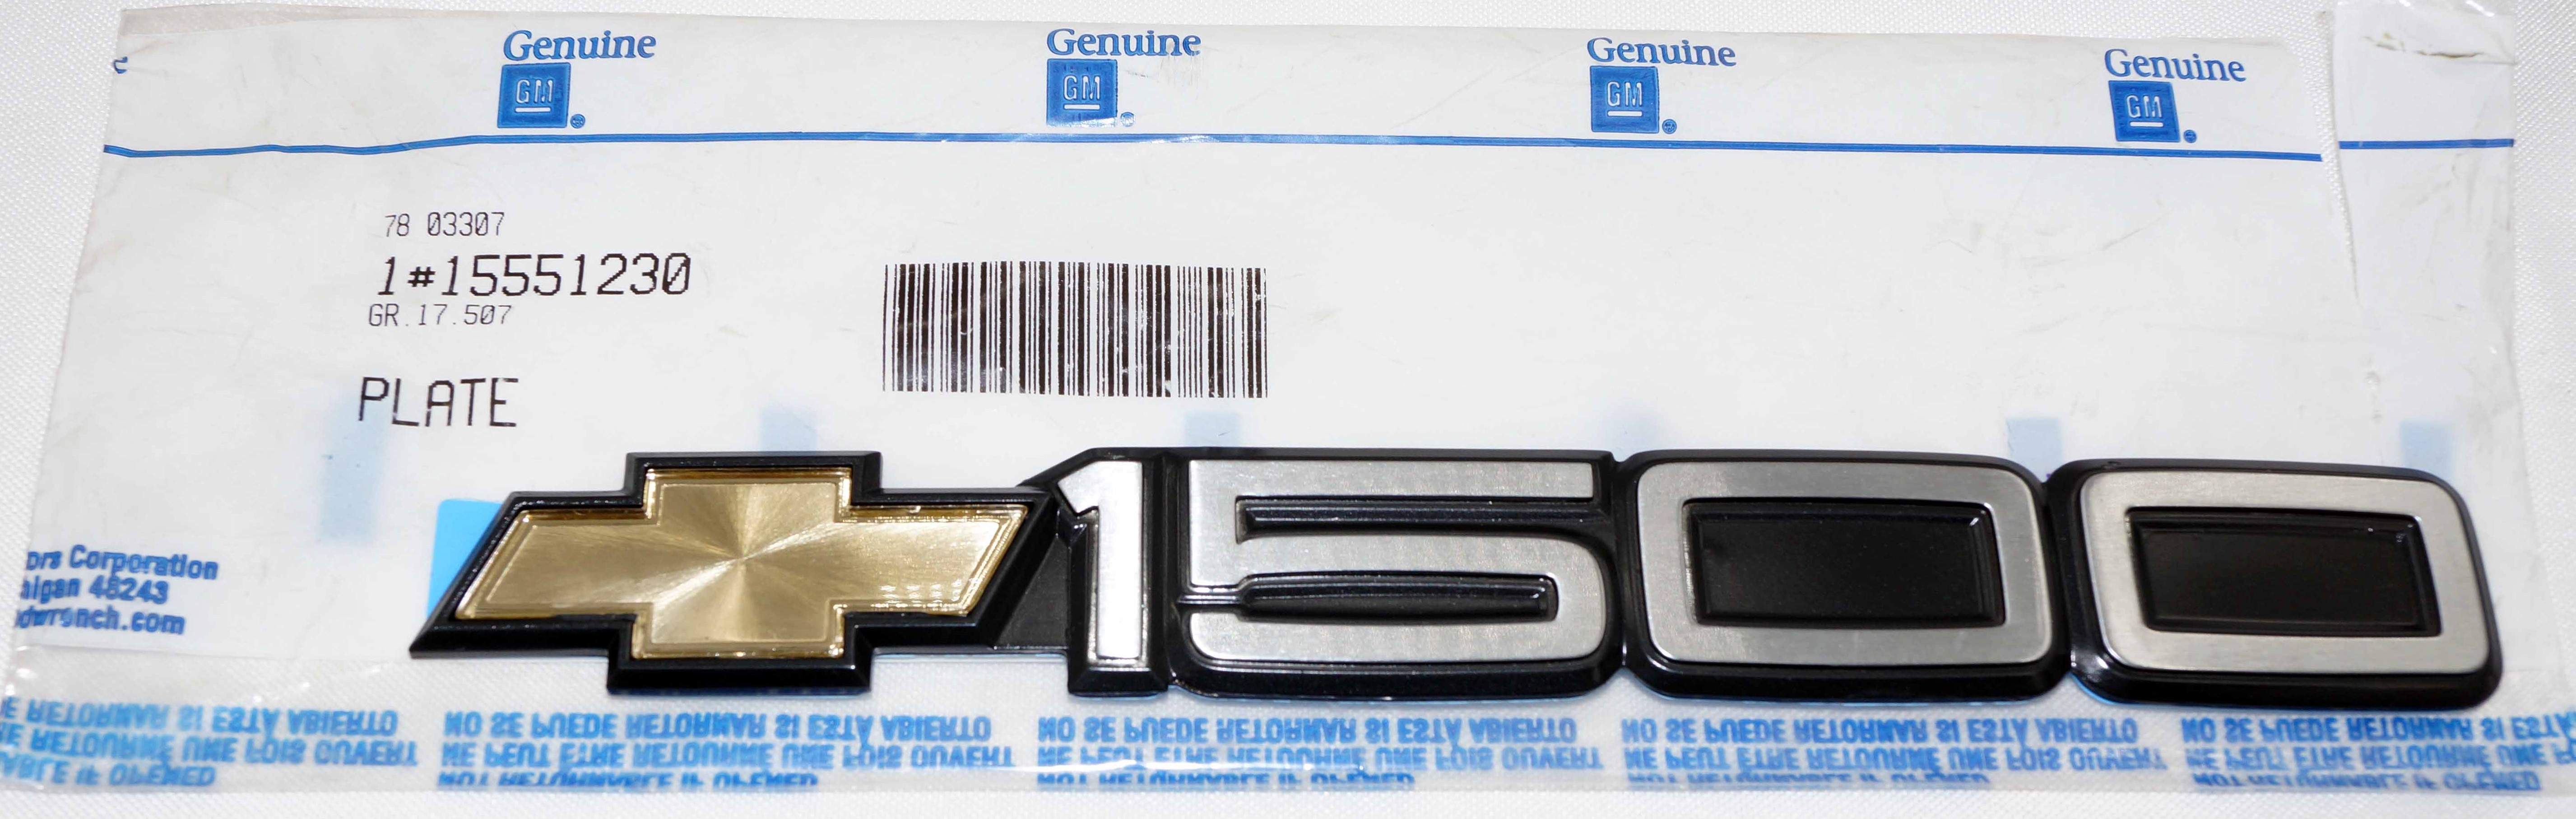 Genuine OEM 15551230 GM Front Side Door Bowtie 1500 Emblem - image 1